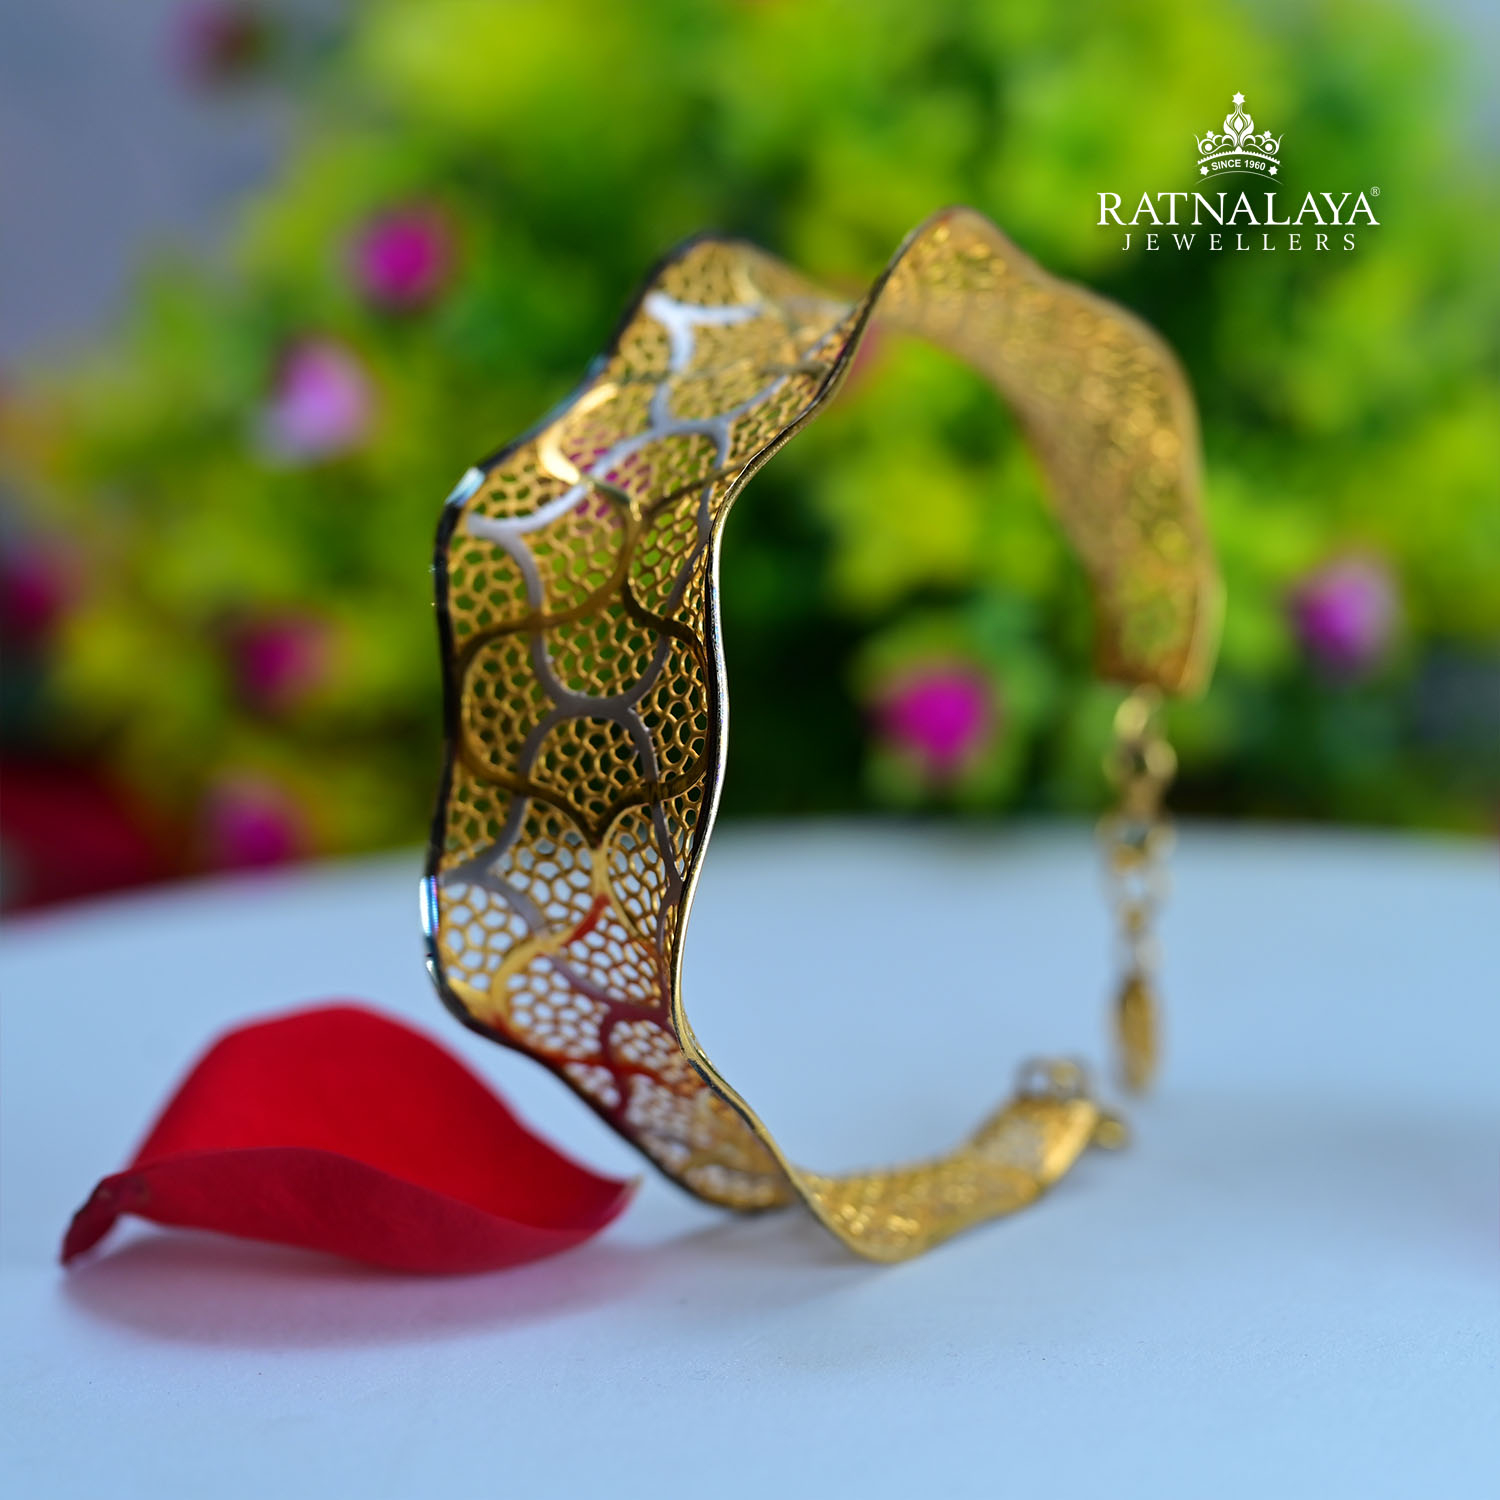 Popular Design Finely Detailed Design Gold Plated Bracelet For Men - Style  C797 at Rs 1200.00 | गोल्ड प्लेटेड ब्रेसलेट - Soni Fashion, Rajkot | ID:  2852470753091